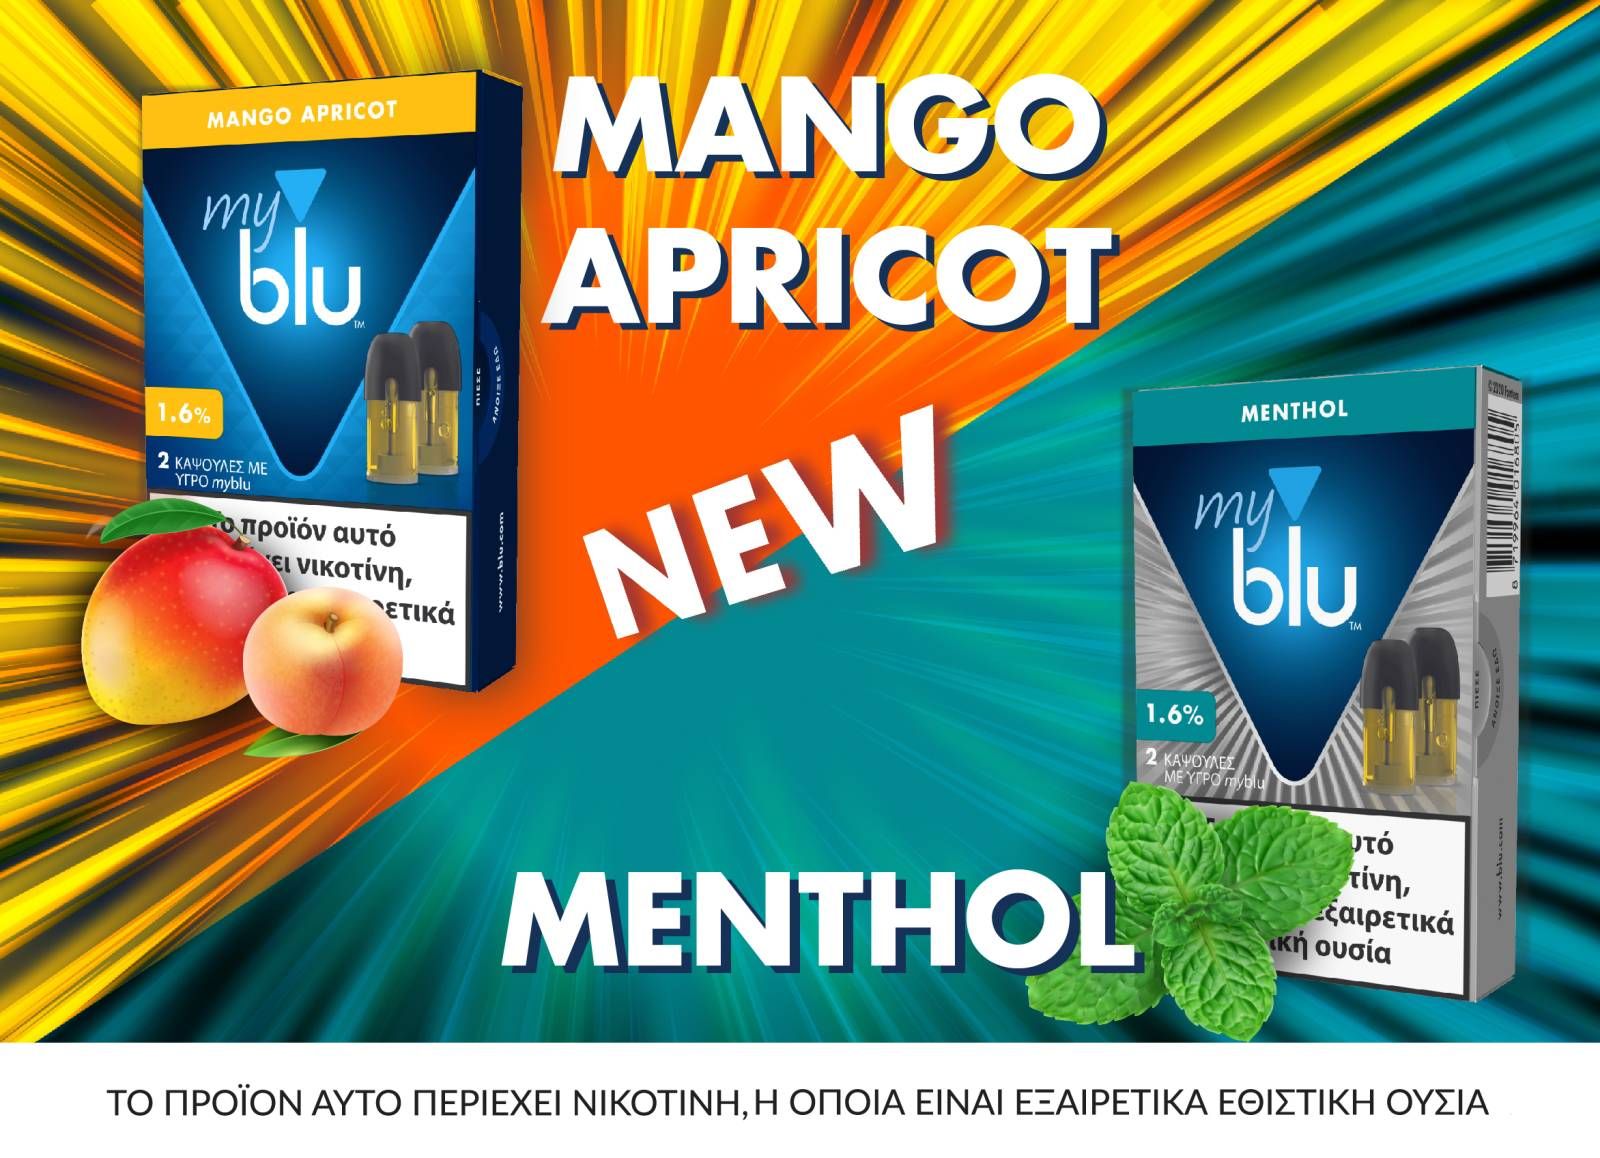 images easyblog articles 10656 myblu Mango Apricot Menthol 01 b6e8dad6